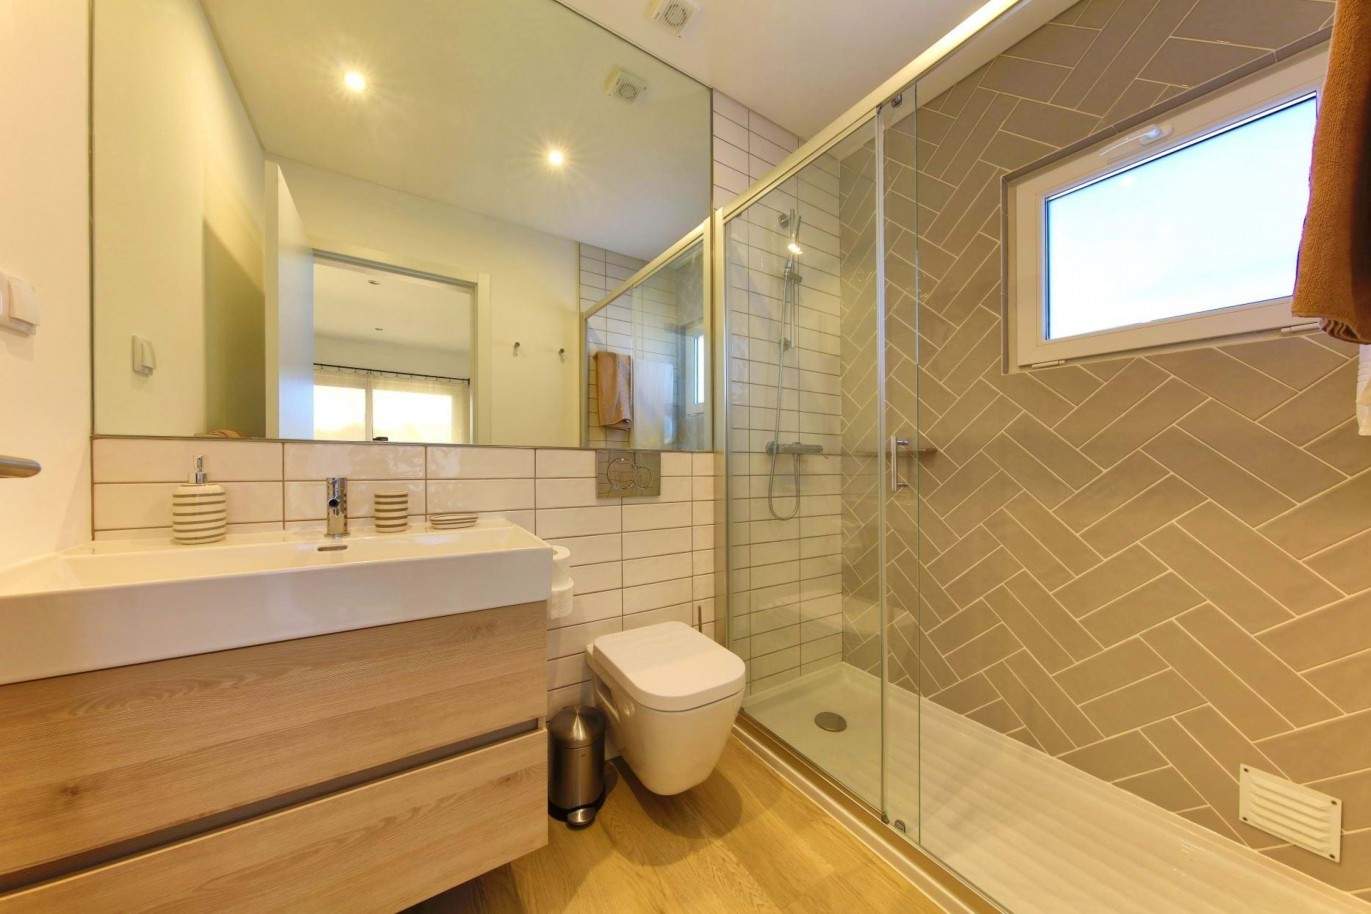 2+1 bedroom villa in resort, for sale in Carvoeiro, Algarve_204851